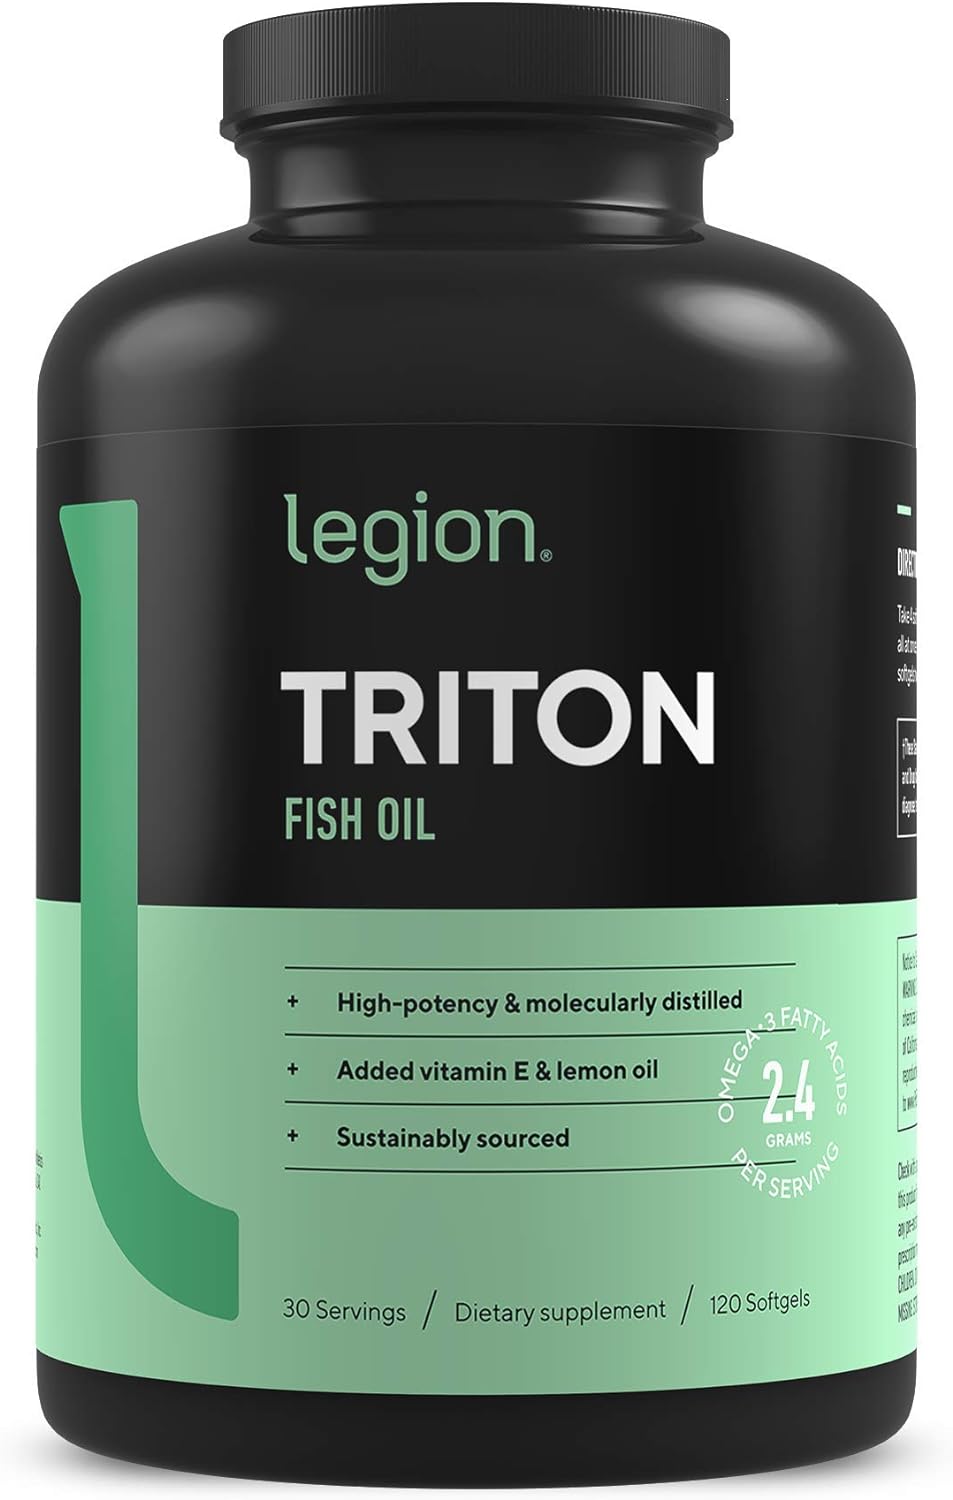 LEGION Triton Fish Oil Capsules - Triple Strength Omega 3 Essential Fatty Acids with Vitamin E & Lemon Oil for Maximum Absorption, Freshness & Purity - 2400mg EPA & DHA Per Serving, 30 Svgs